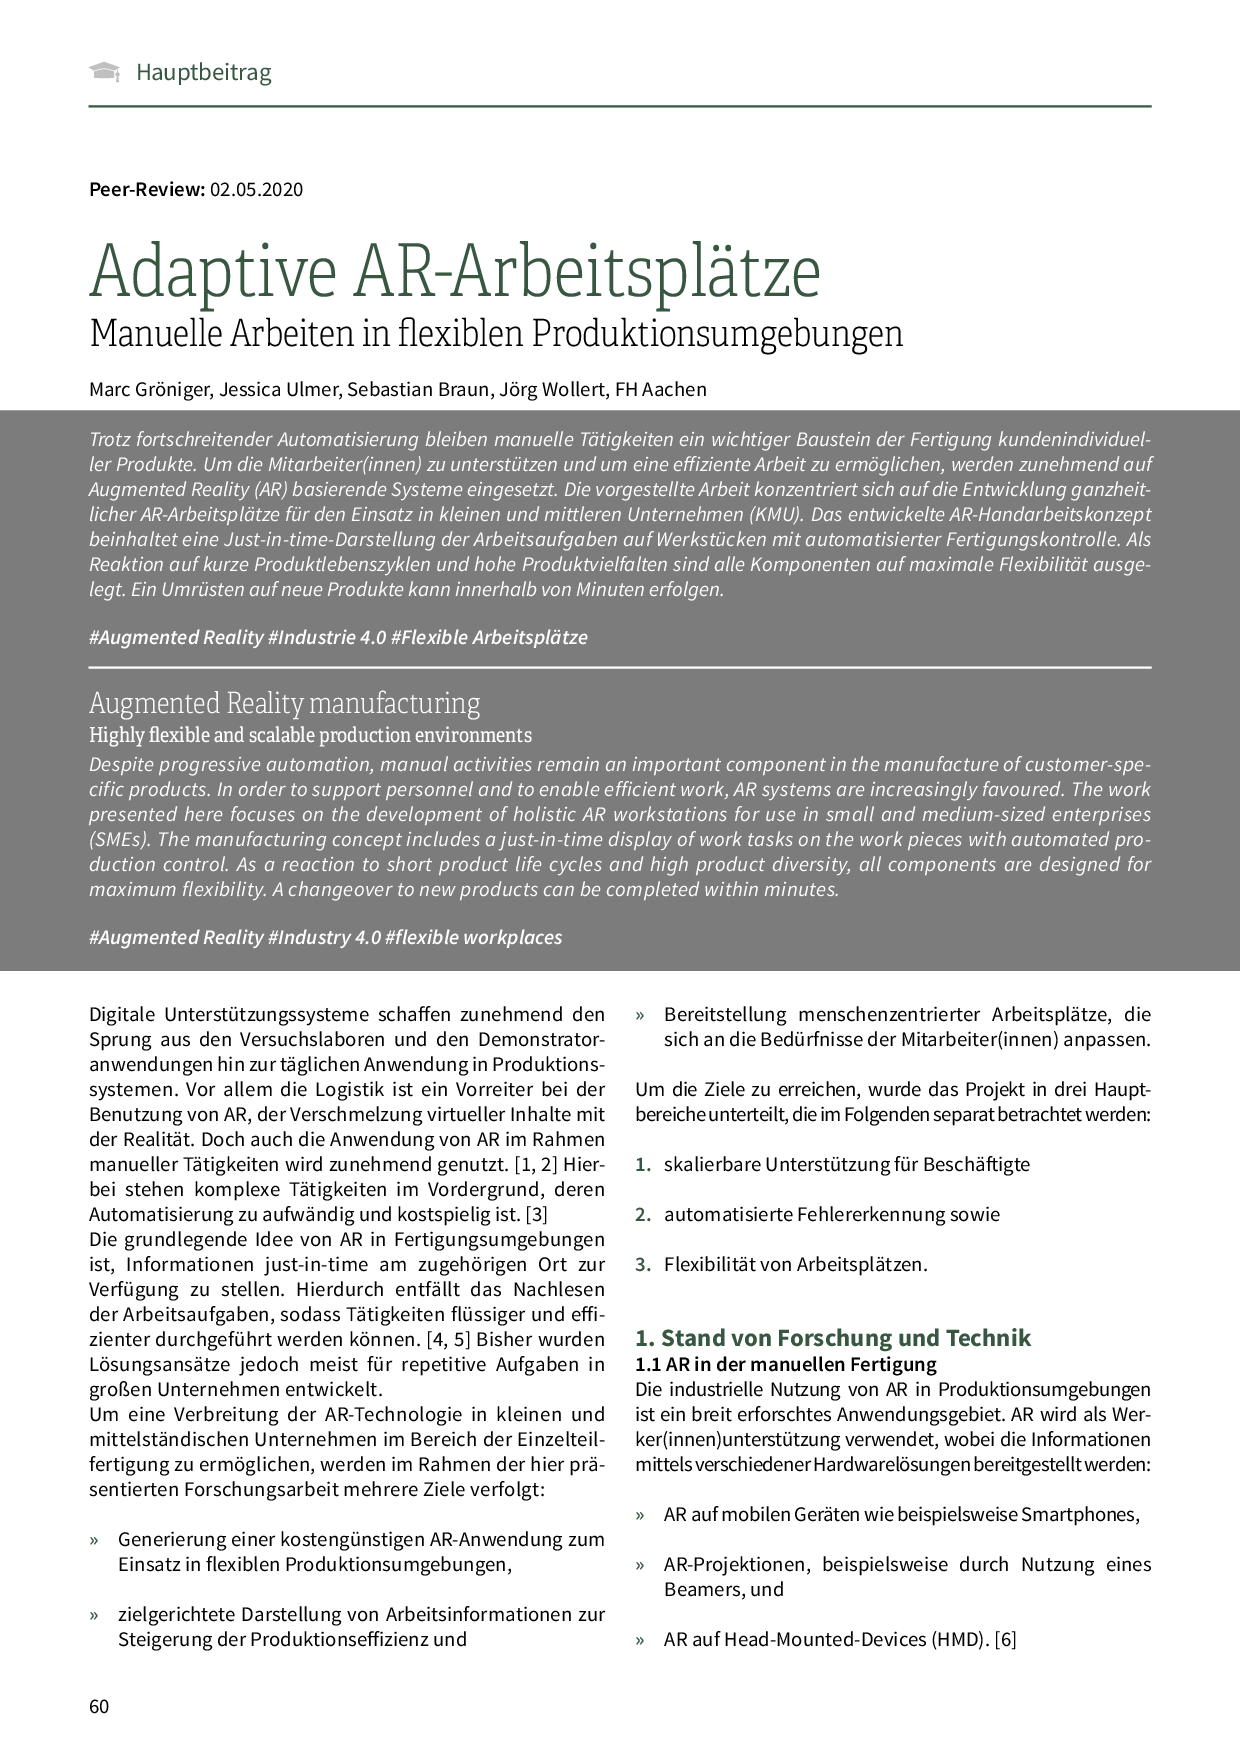 Adaptive AR-Arbeitsplätze